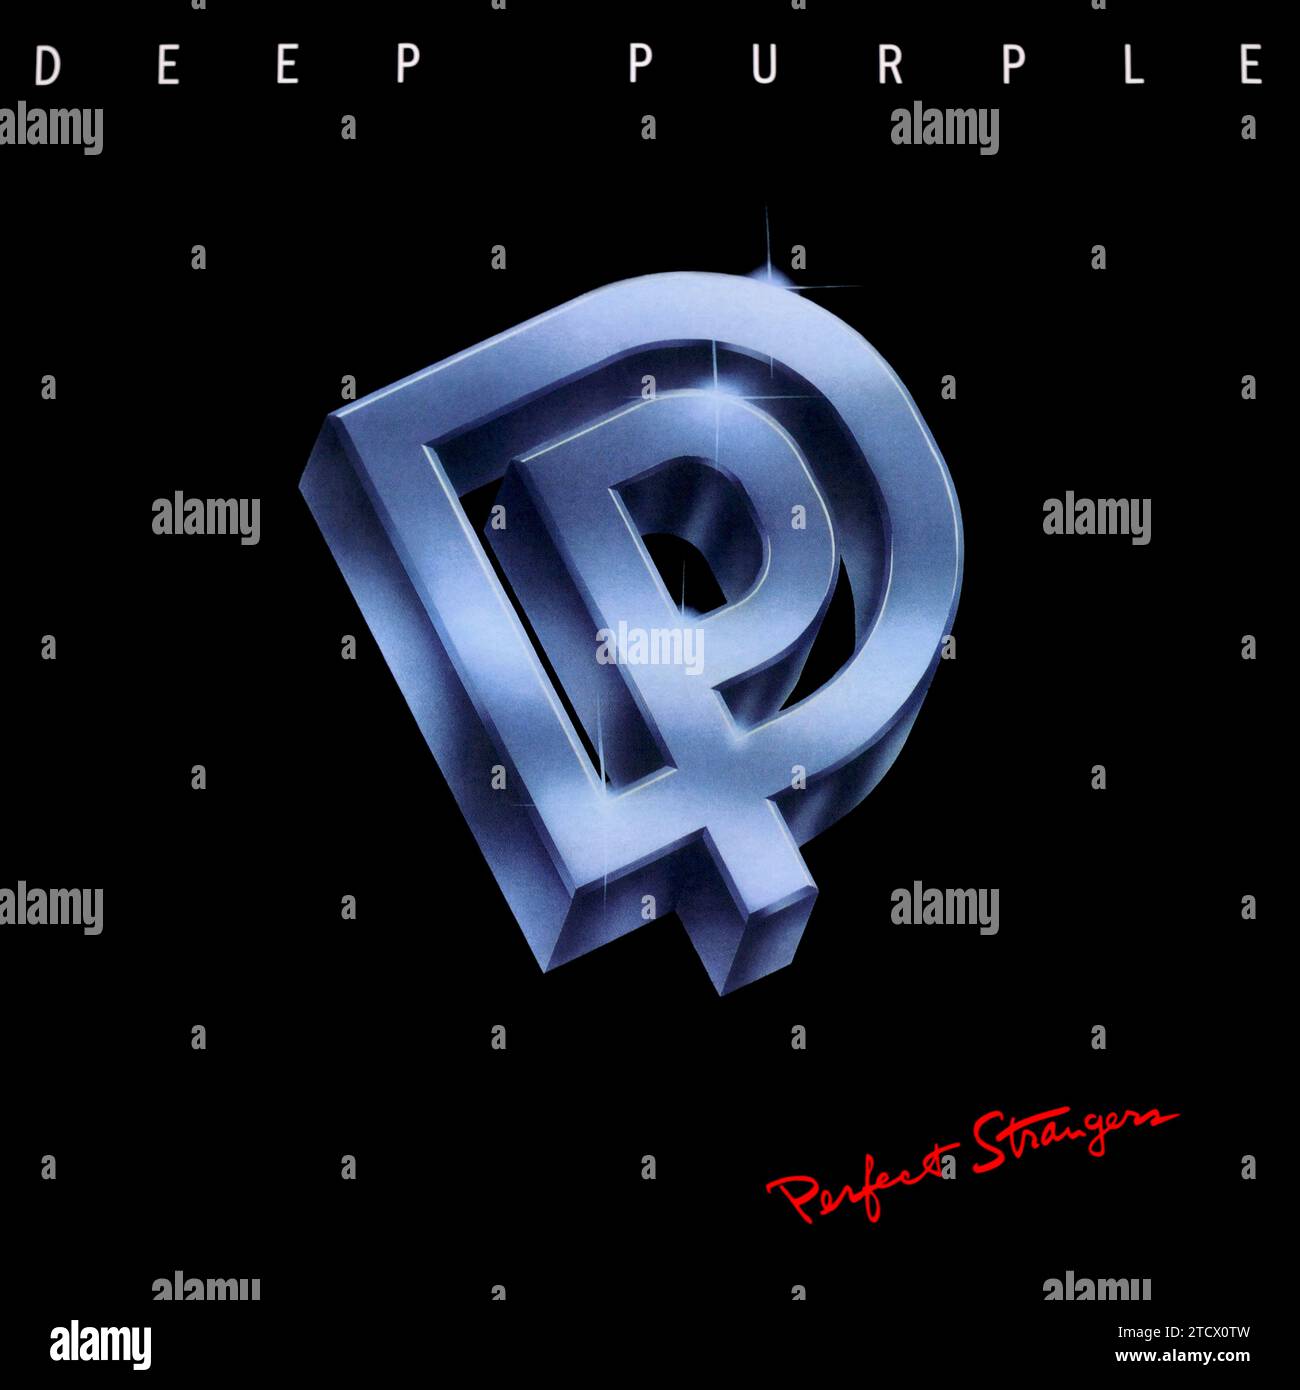 Deep Purple - original vinyl album cover - Perfect Strangers - 1984 Stock Photo